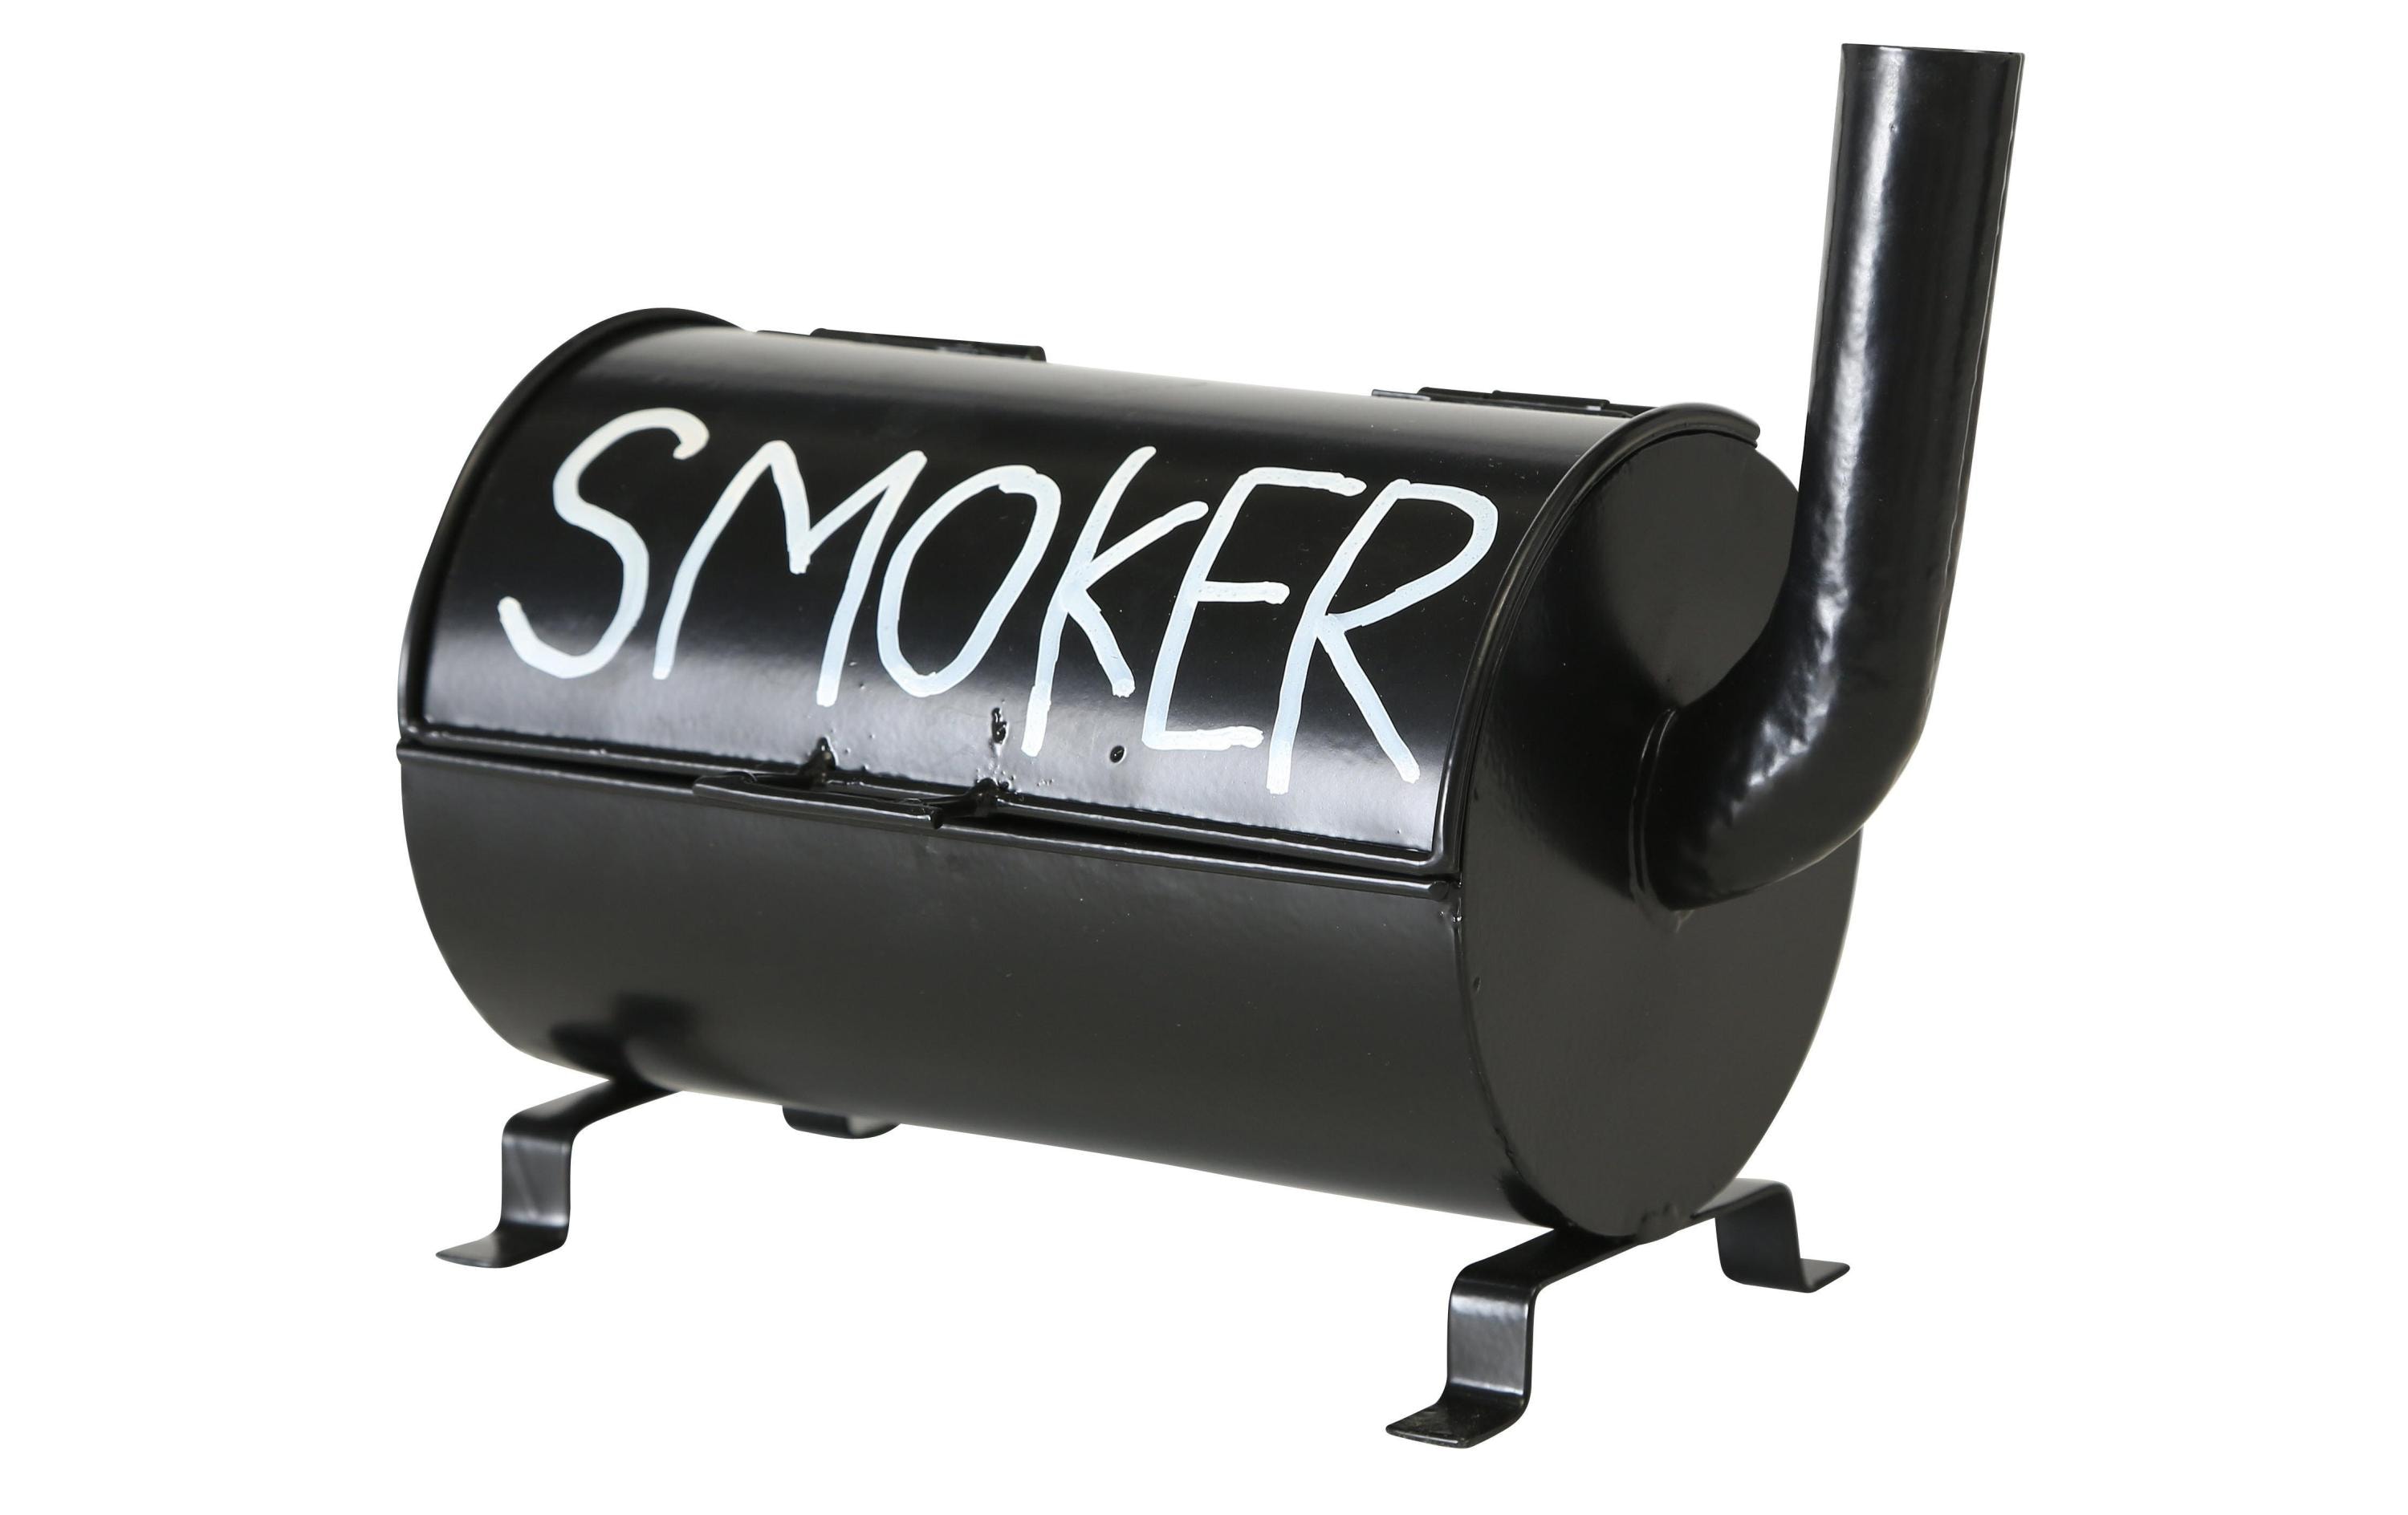 Boltze Aschenbecher Smoker - Hochwertiger Raucherzubehör bei